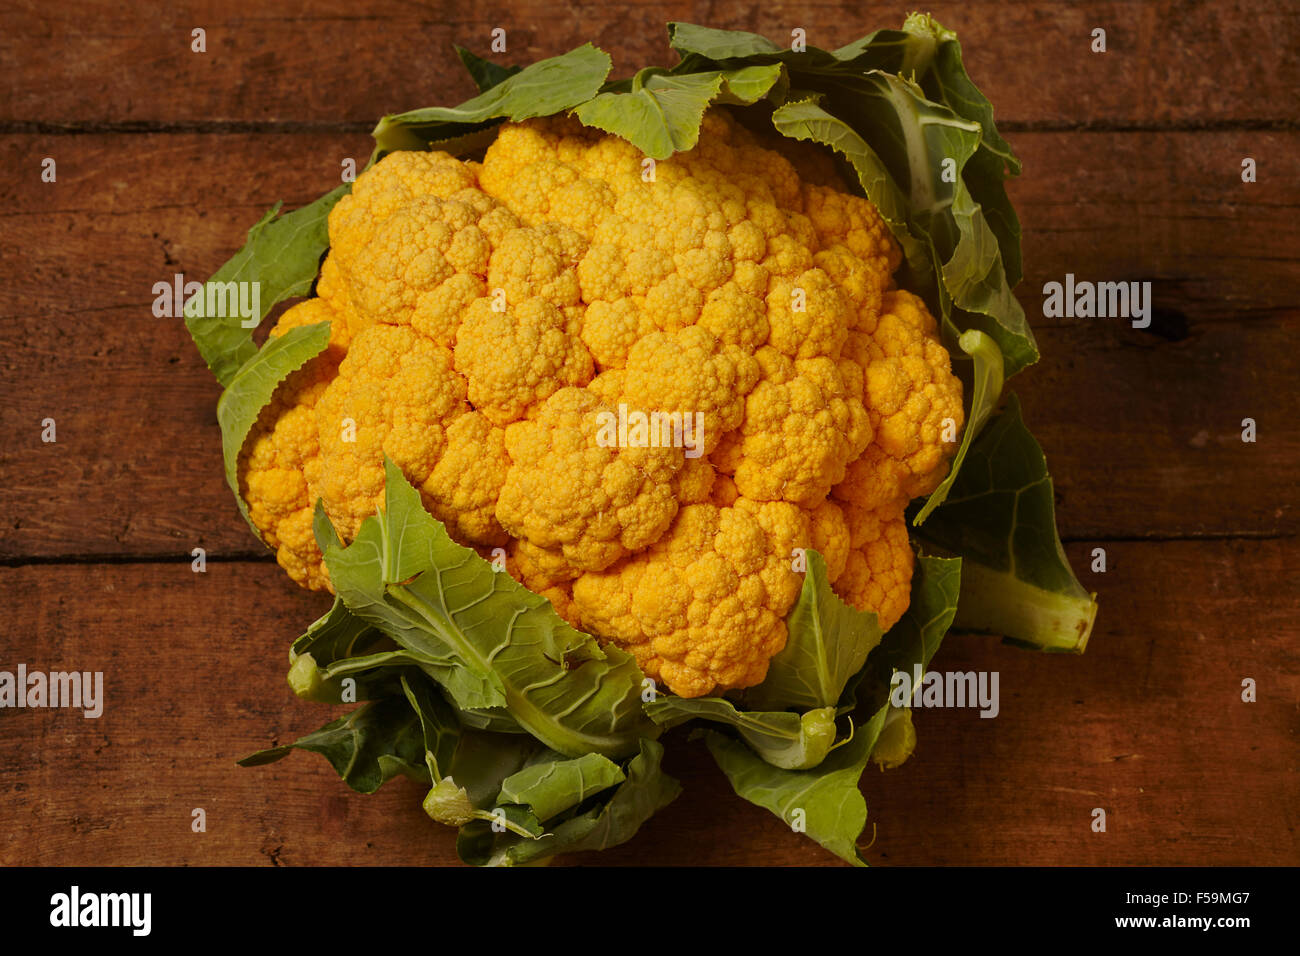 a whole head of golden cauliflower Stock Photo